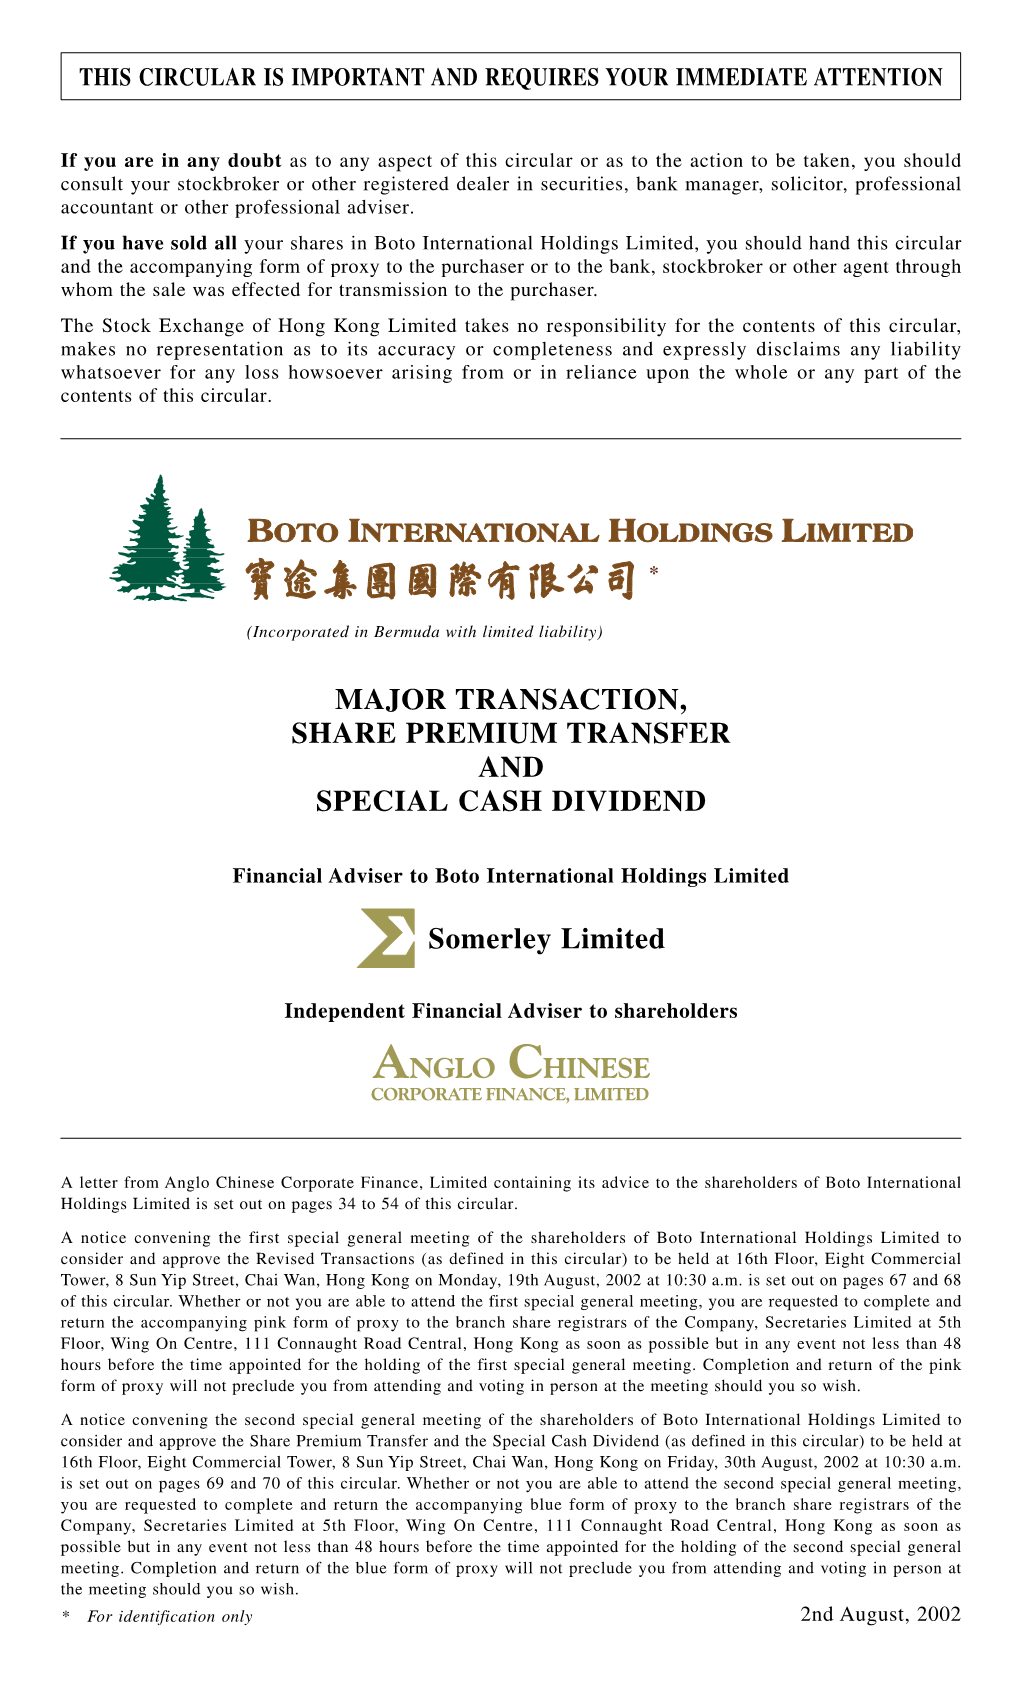 Major Transaction, Share Premium Transfer and Special Cash Dividend